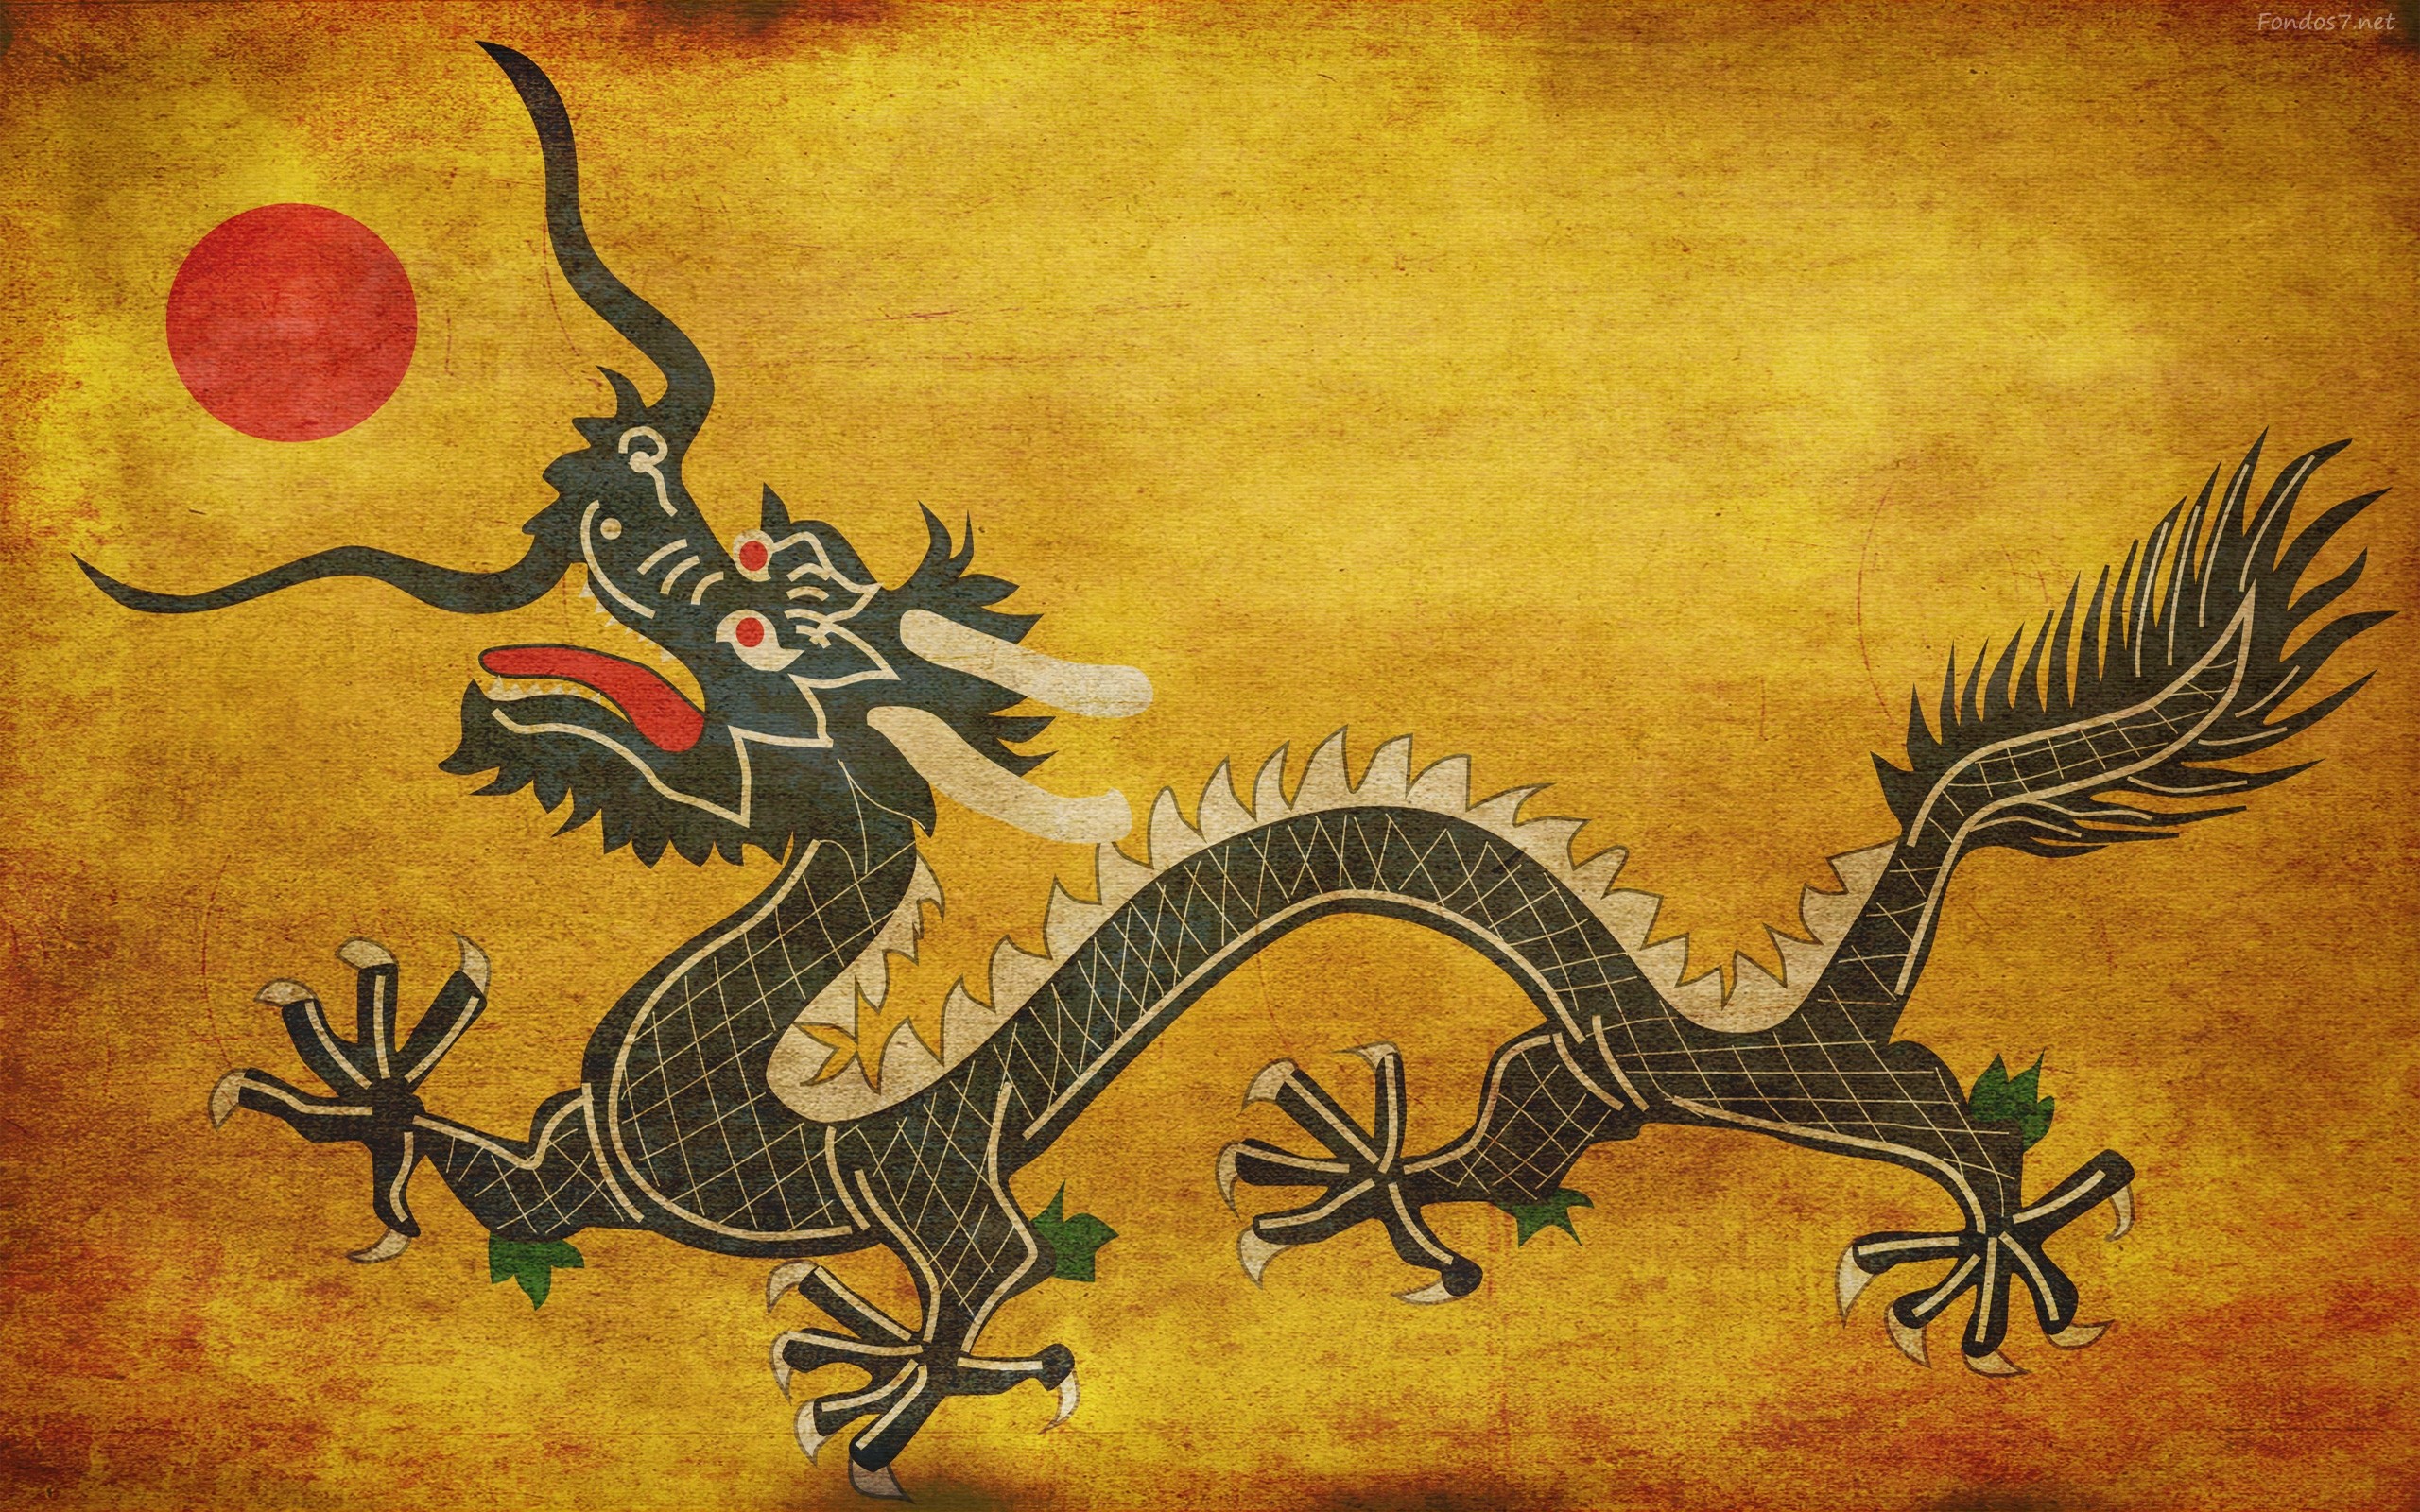 Viejo Dragon Chino Grunge 426 Dragons Pinterest Dragon fight, Dragons and Wallpaper